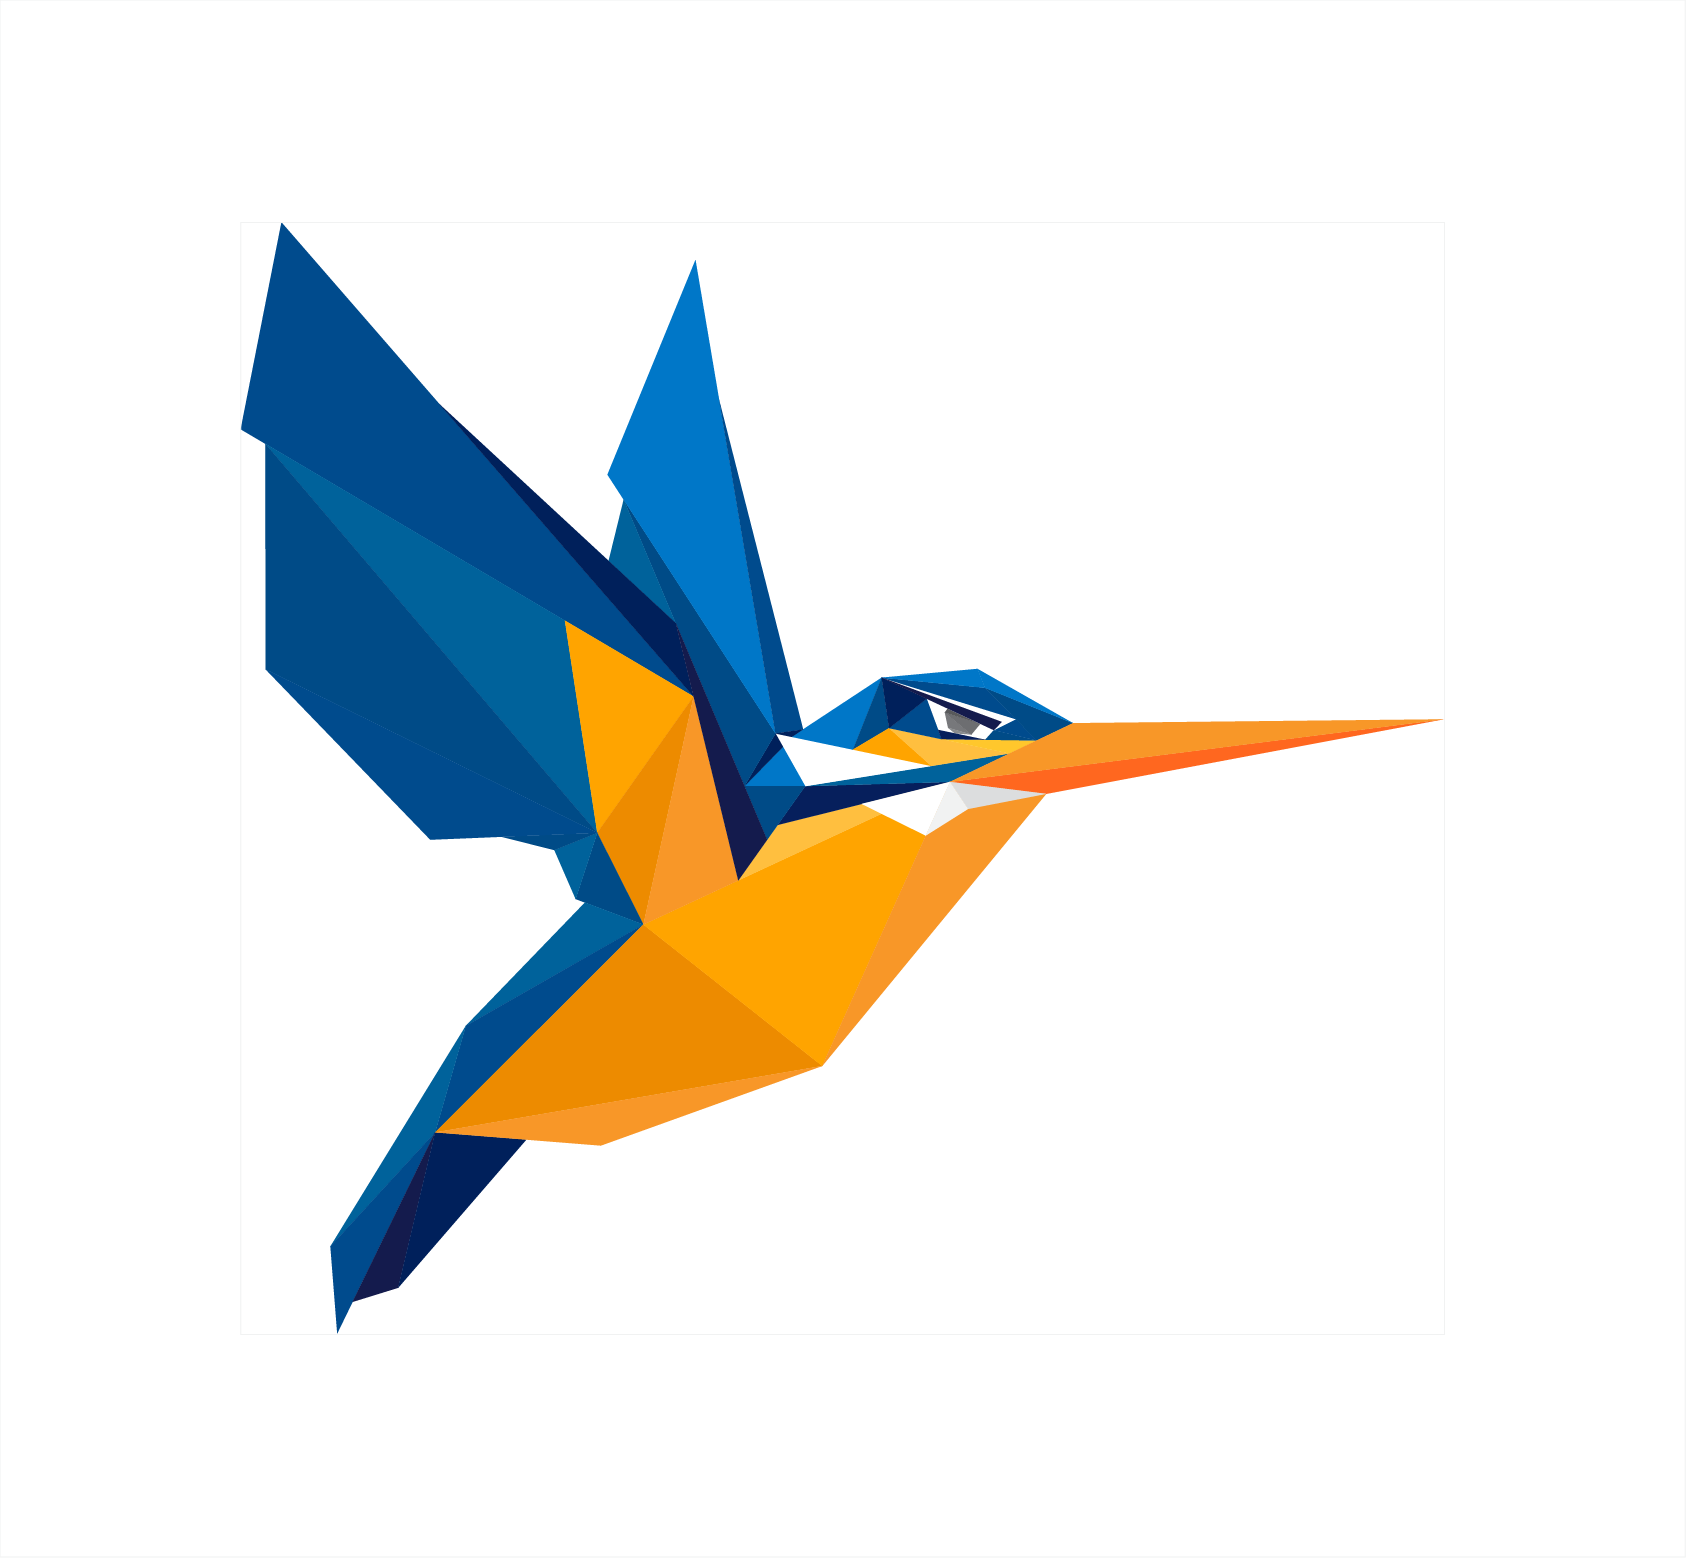 White-breasted Kingfisher (Ha